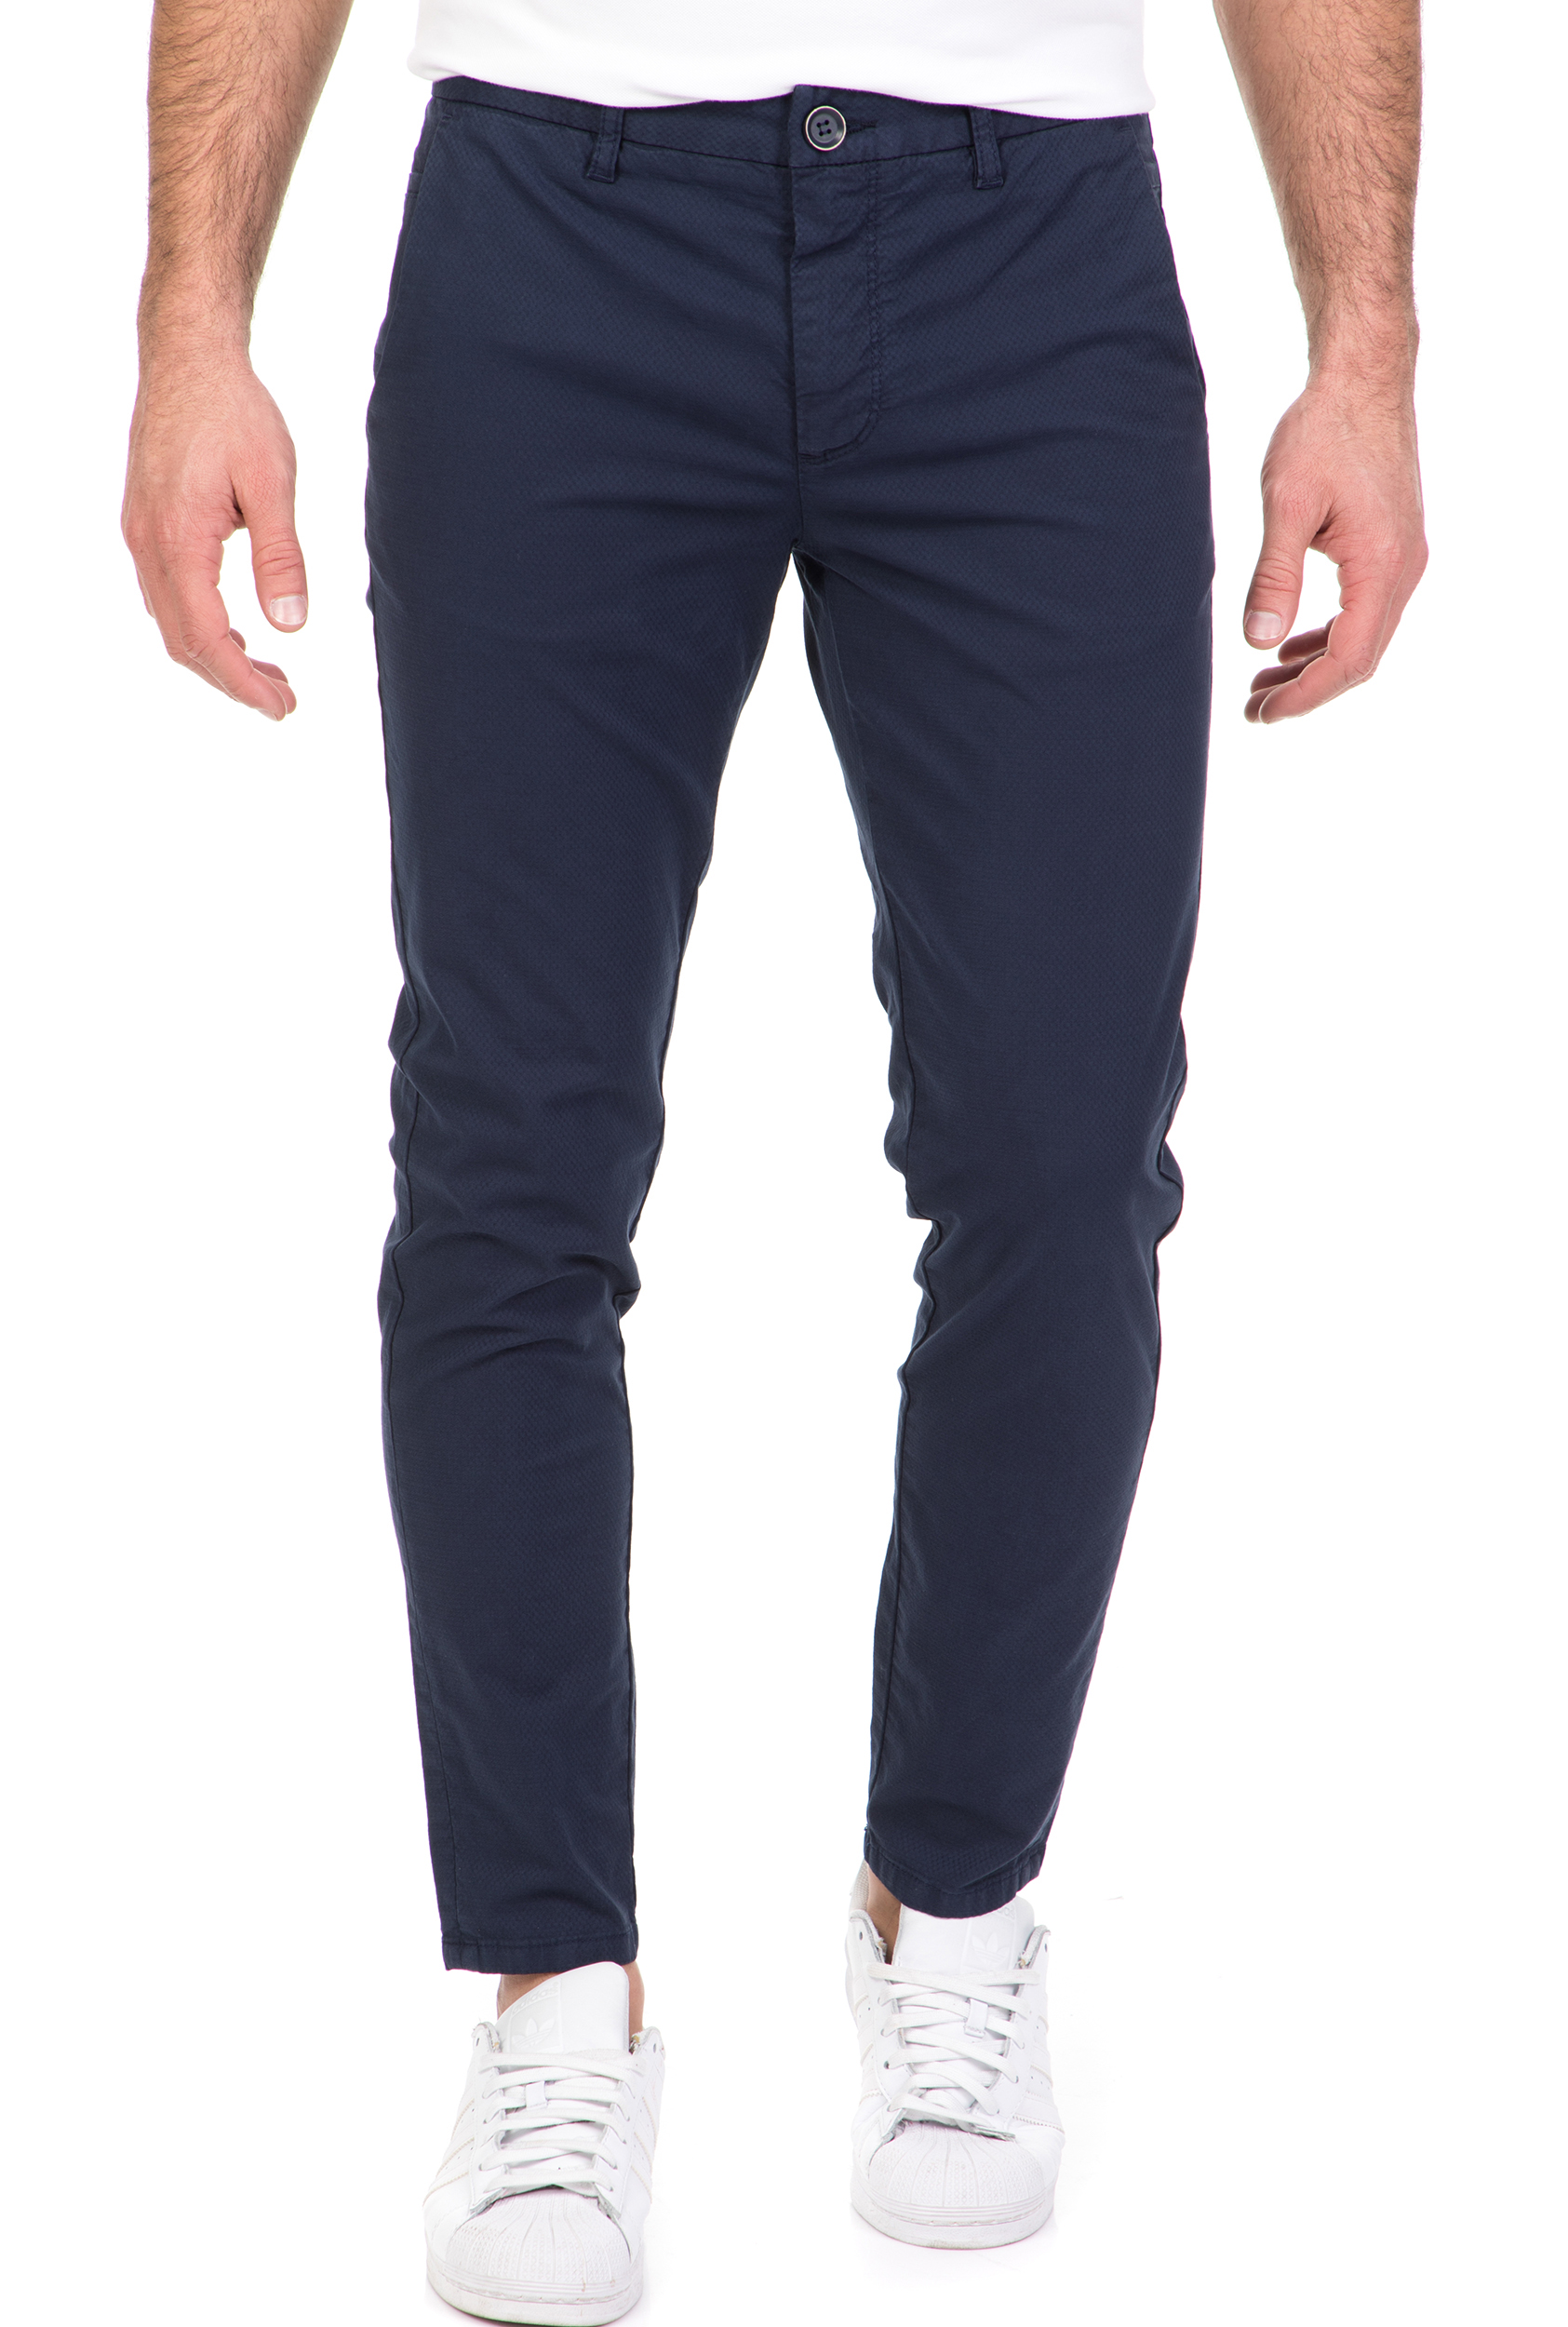 SSEINSE - Ανδρικό chino παντελόνι SSEINSE μπλε Ανδρικά/Ρούχα/Παντελόνια/Chinos